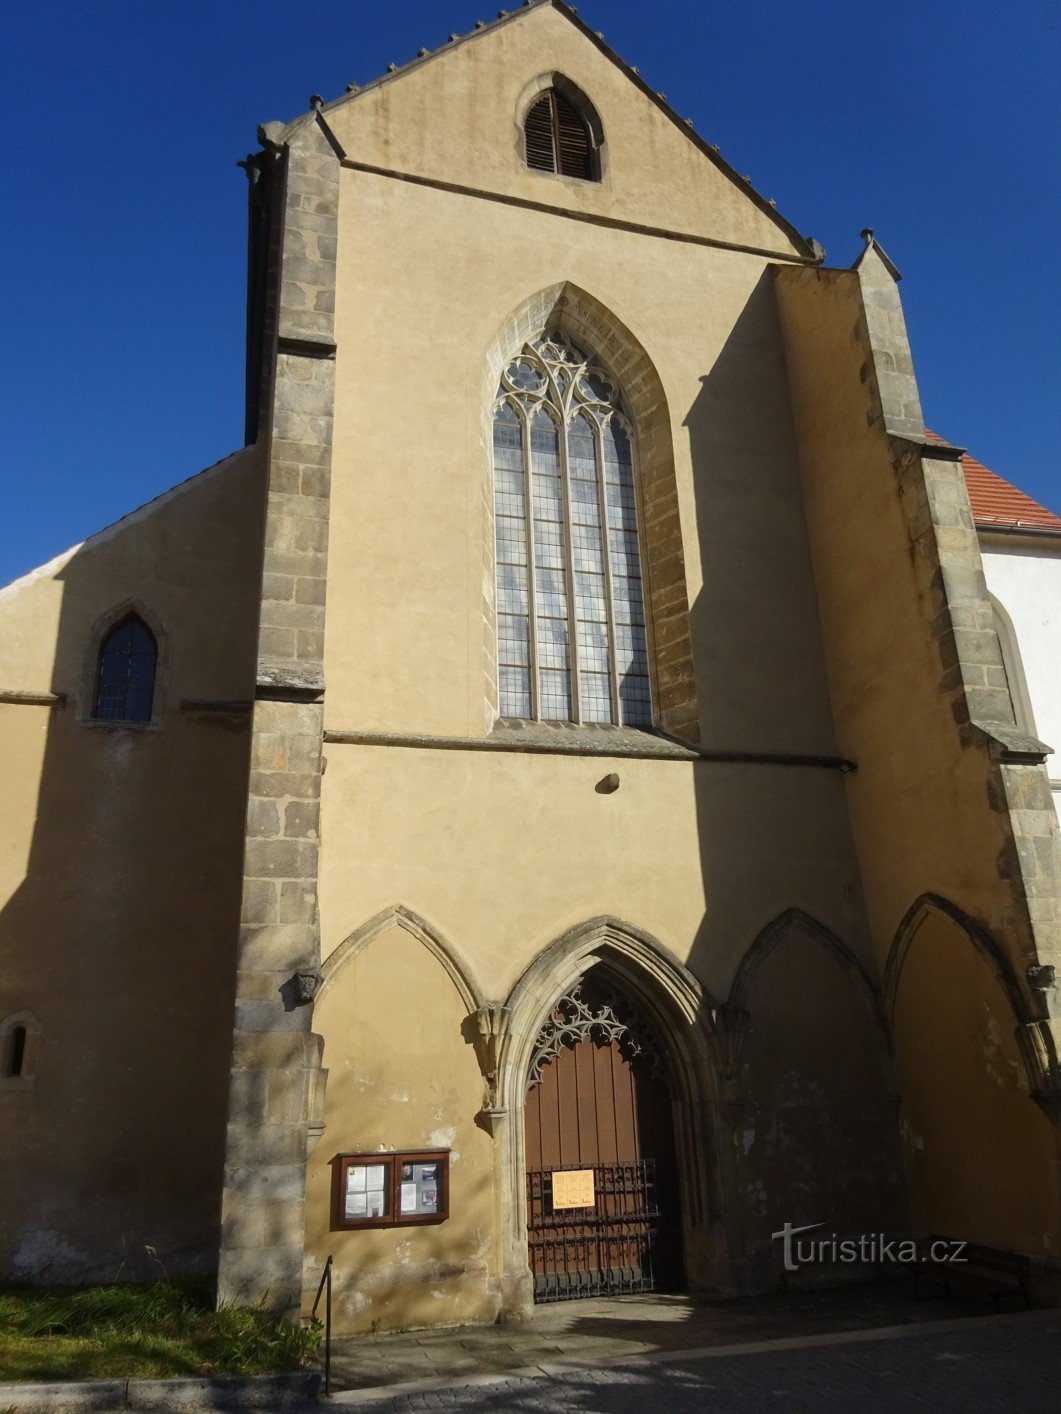 Cistercian monastery in the village of Zlatá koruna